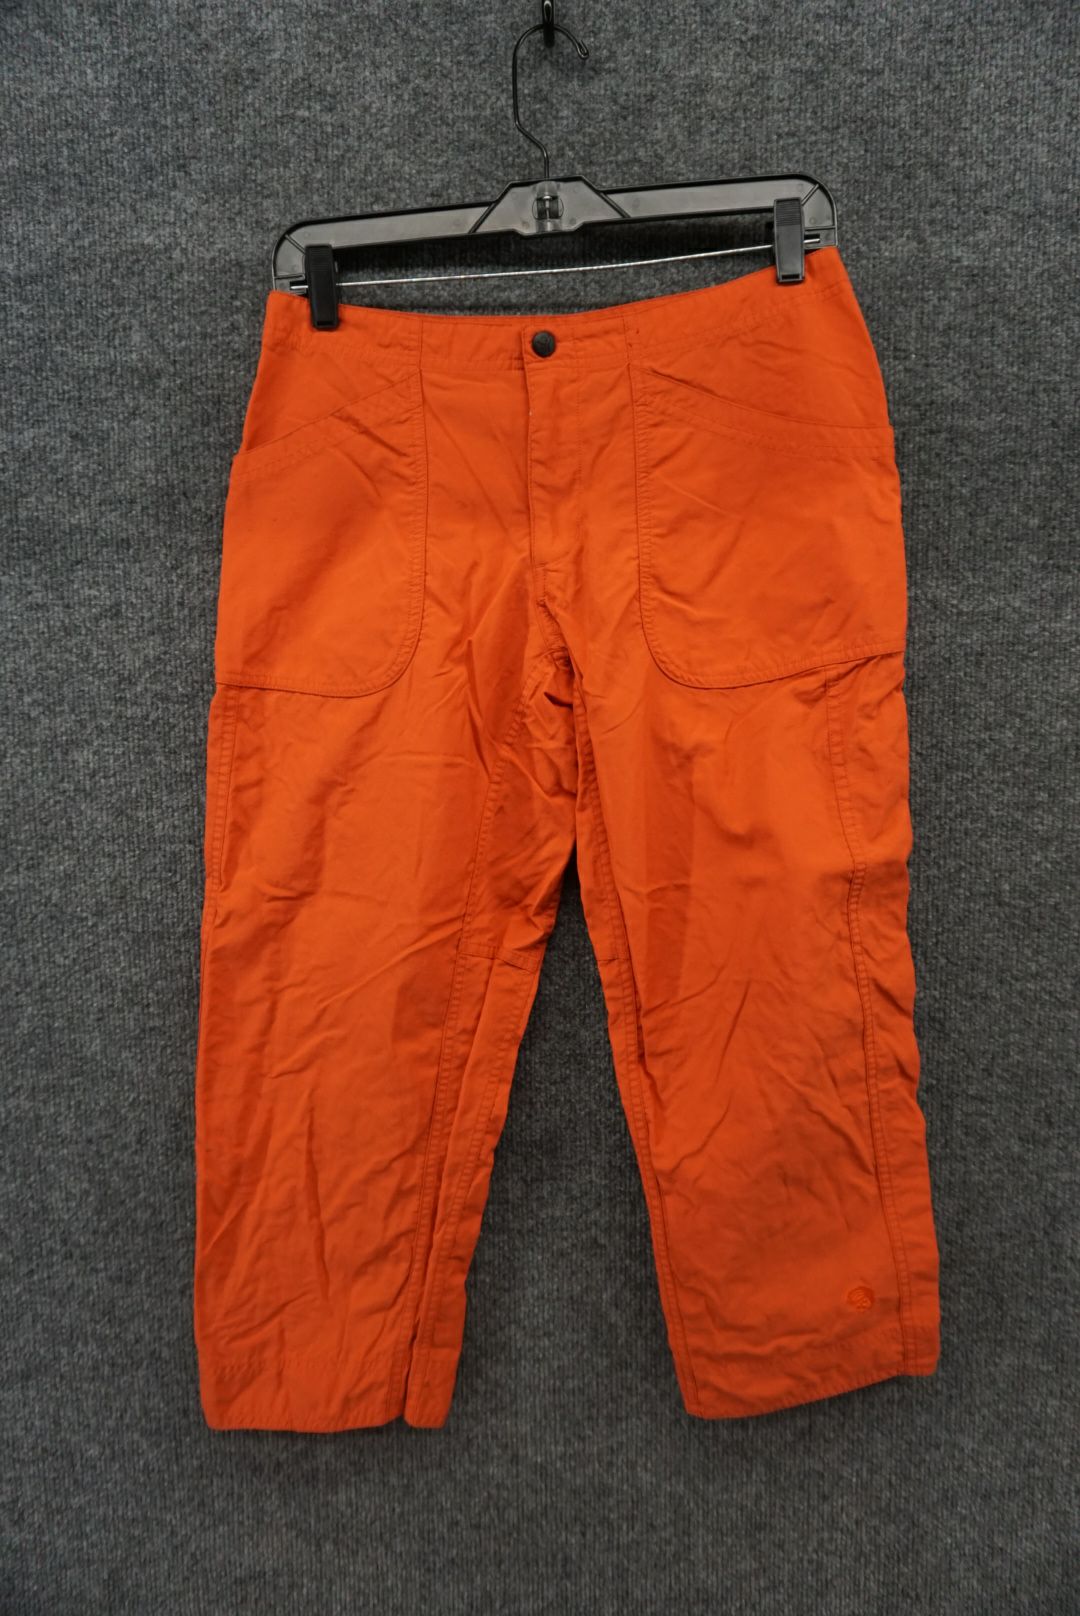 Mountain Hardwear Orange Size W6 Women's Capri Pants